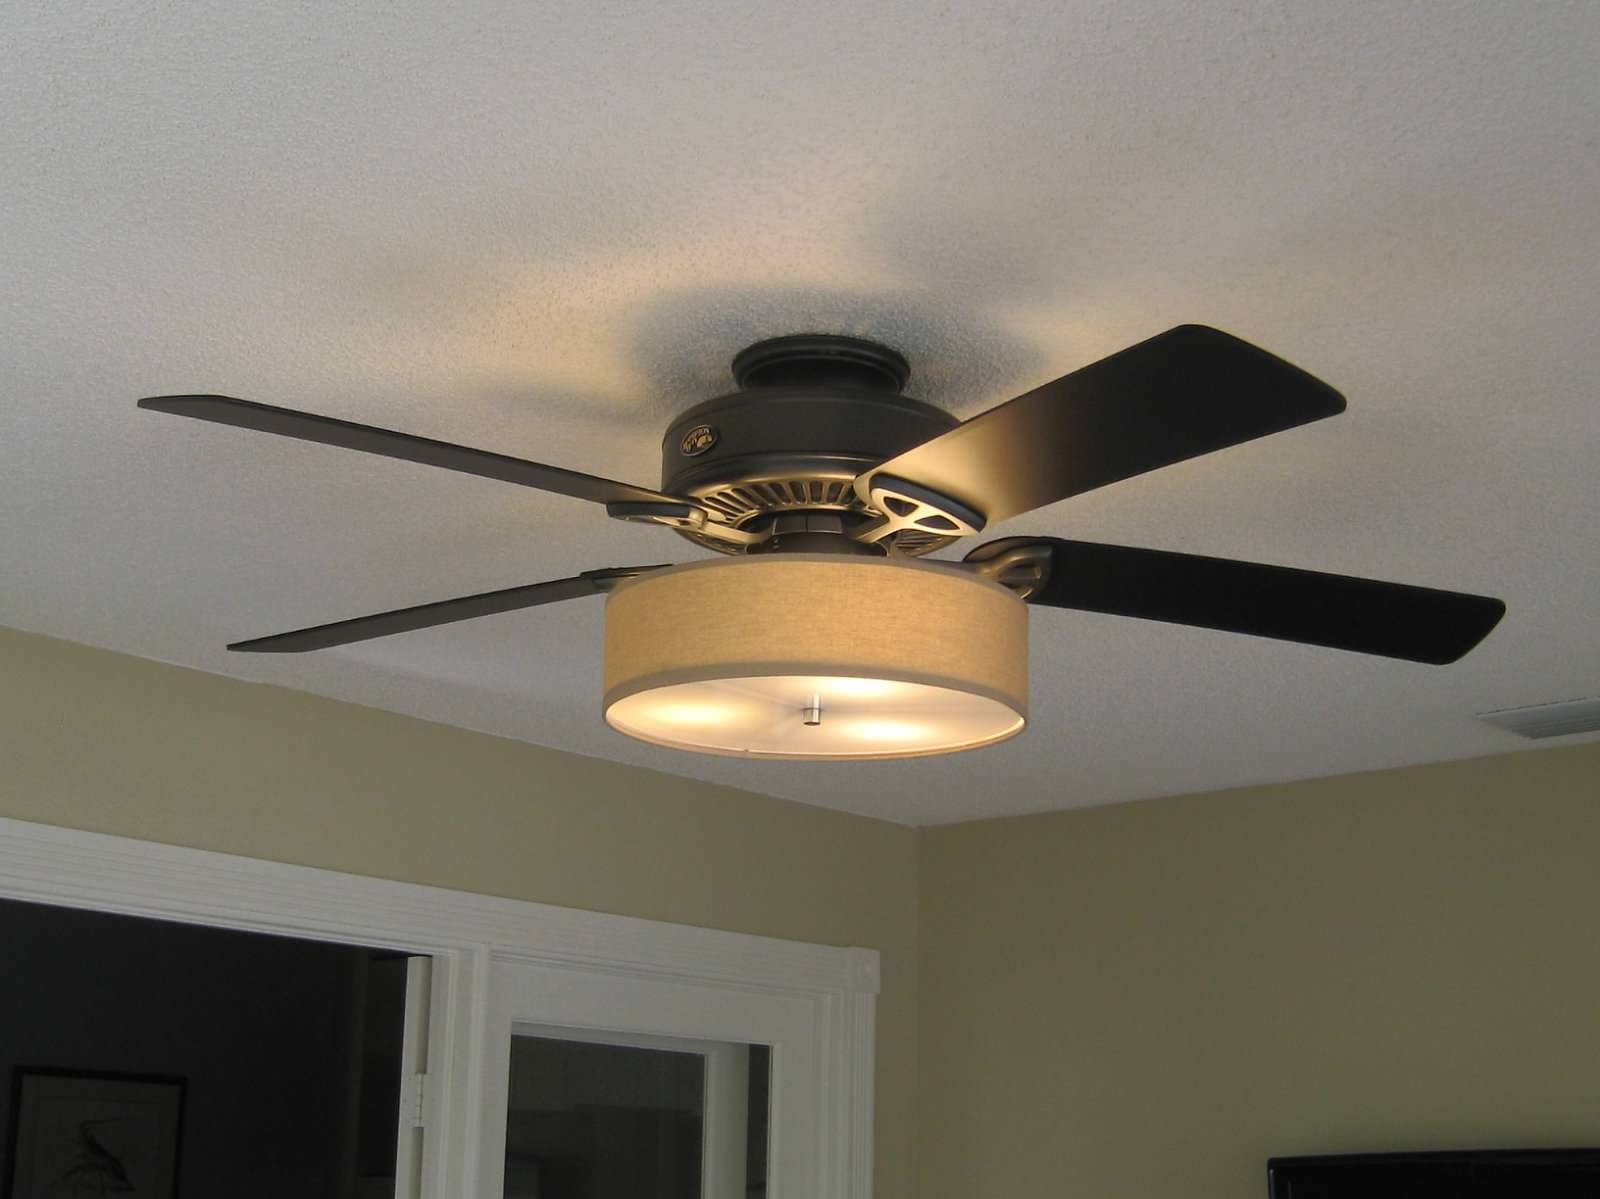 Drum Shade Ceiling Light Kitlow profile linen drum shade light kit for ceiling fan st